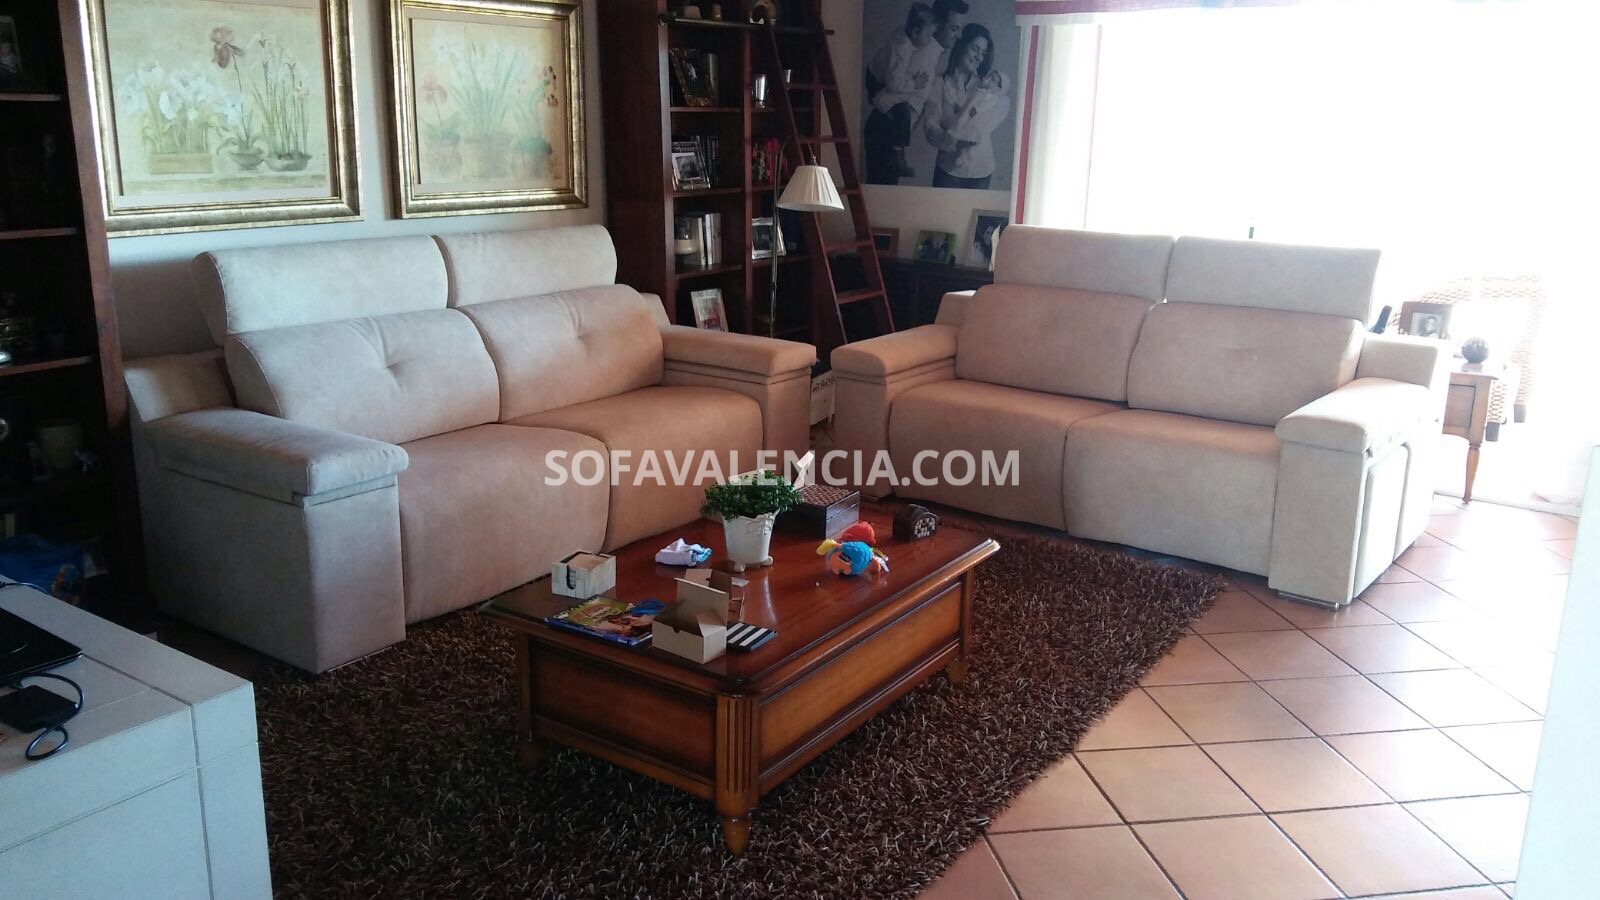 sofa-valencia-fotos-clientes-43